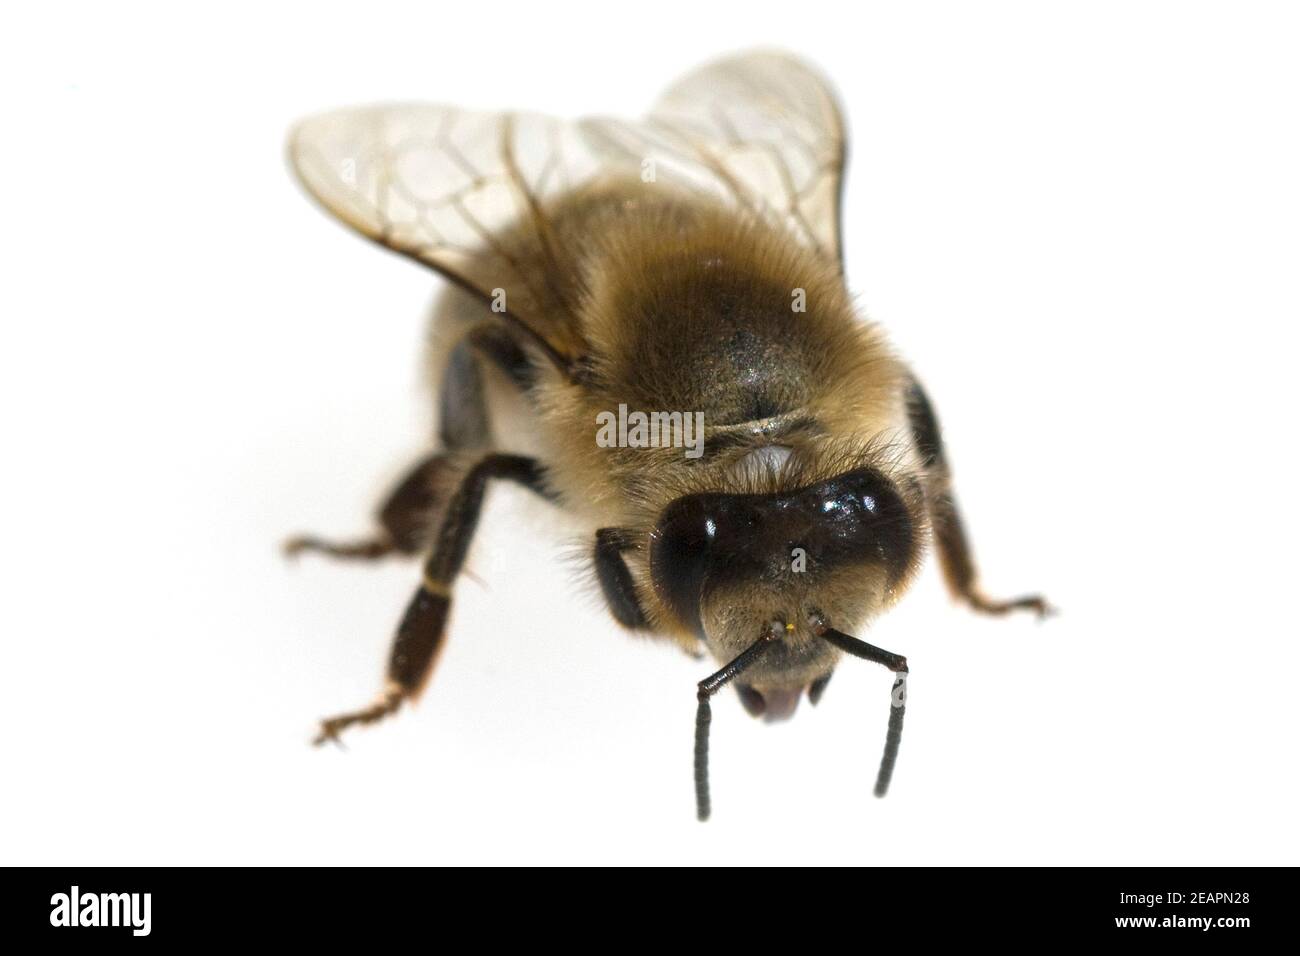 Biene, Apis mellifera  Honigbiene  Insekt Stock Photo